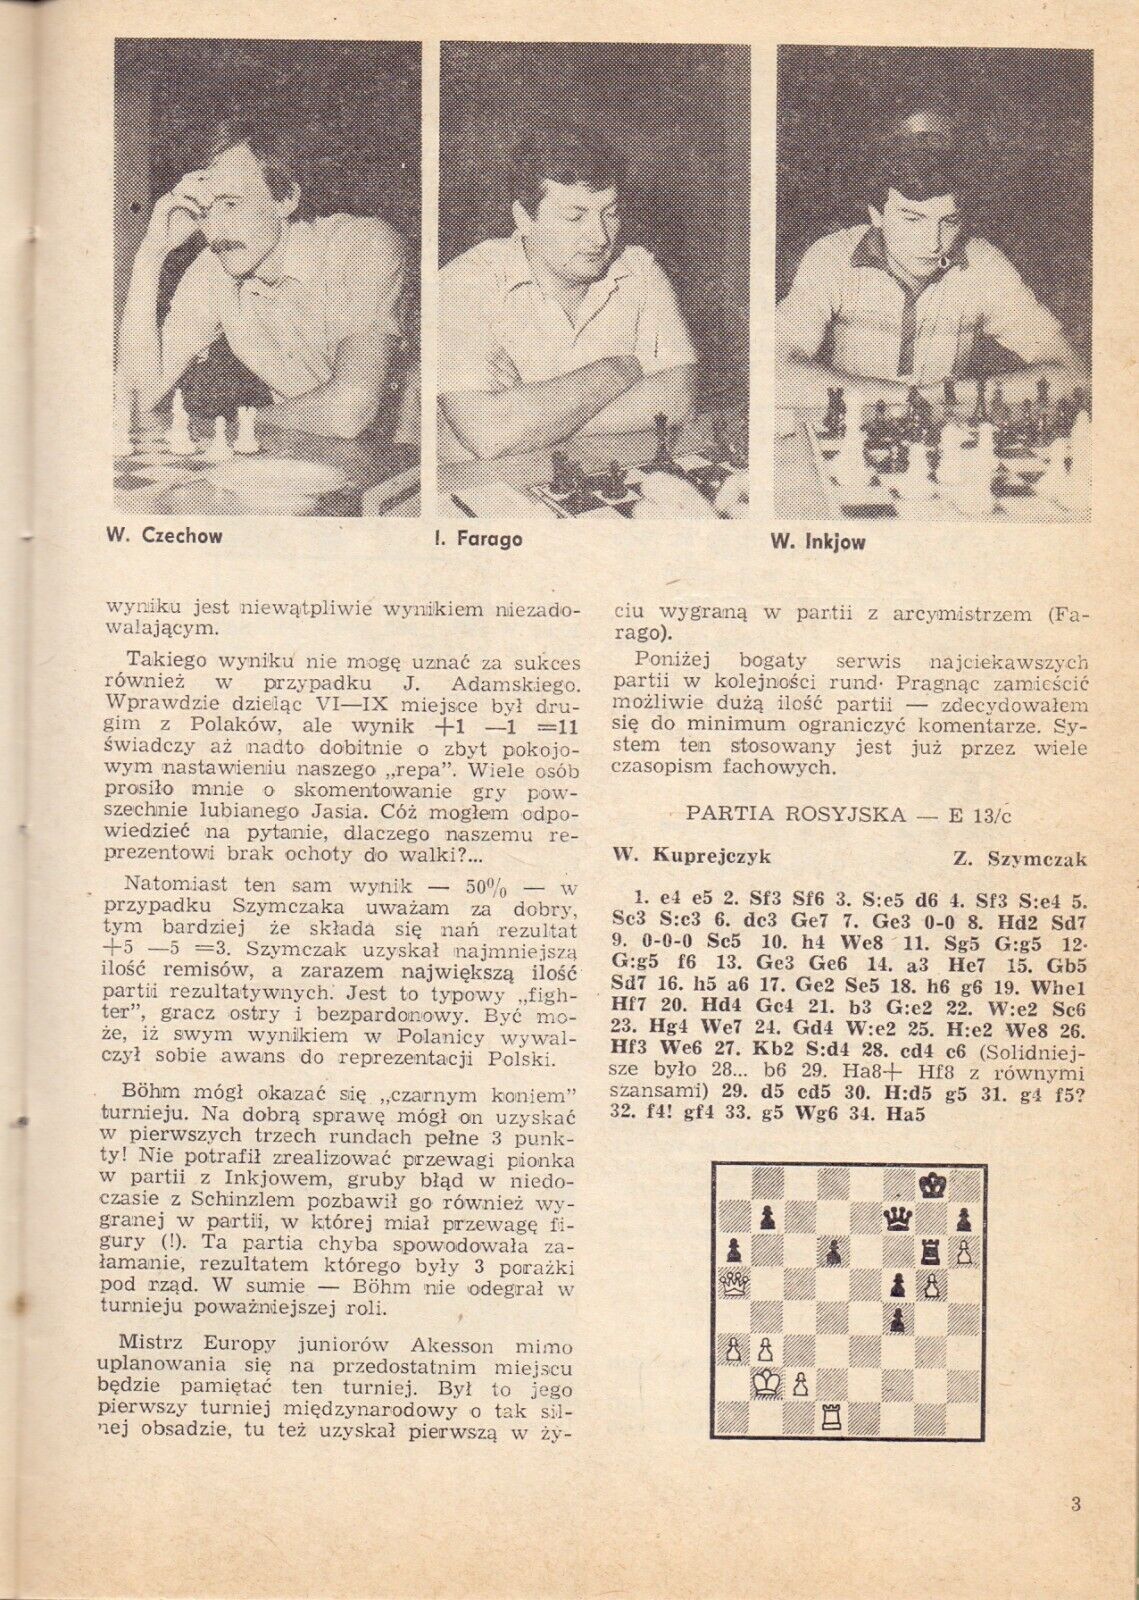 11397.Polish chess magazine «Szachy». Annual sets 1982 and 1983